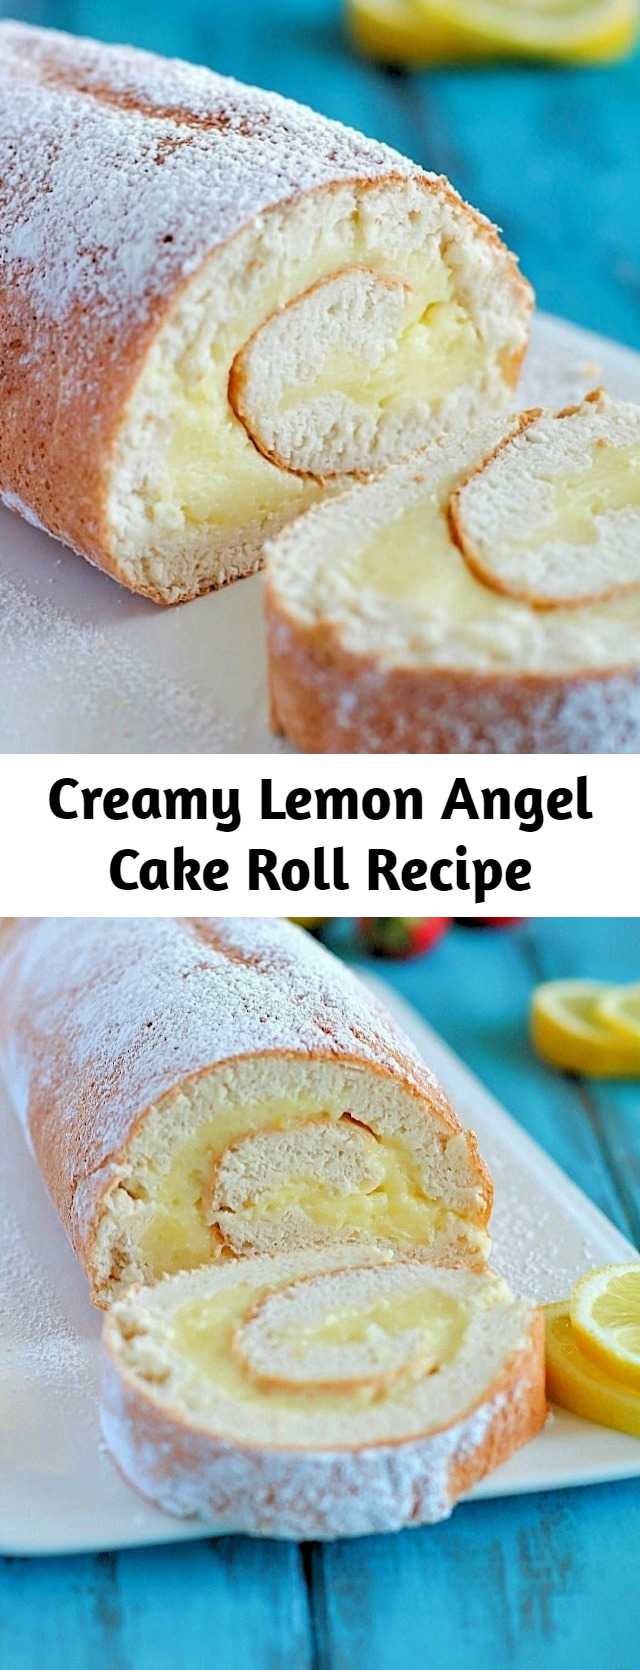 Creamy Lemon Angel Cake Roll Recipe